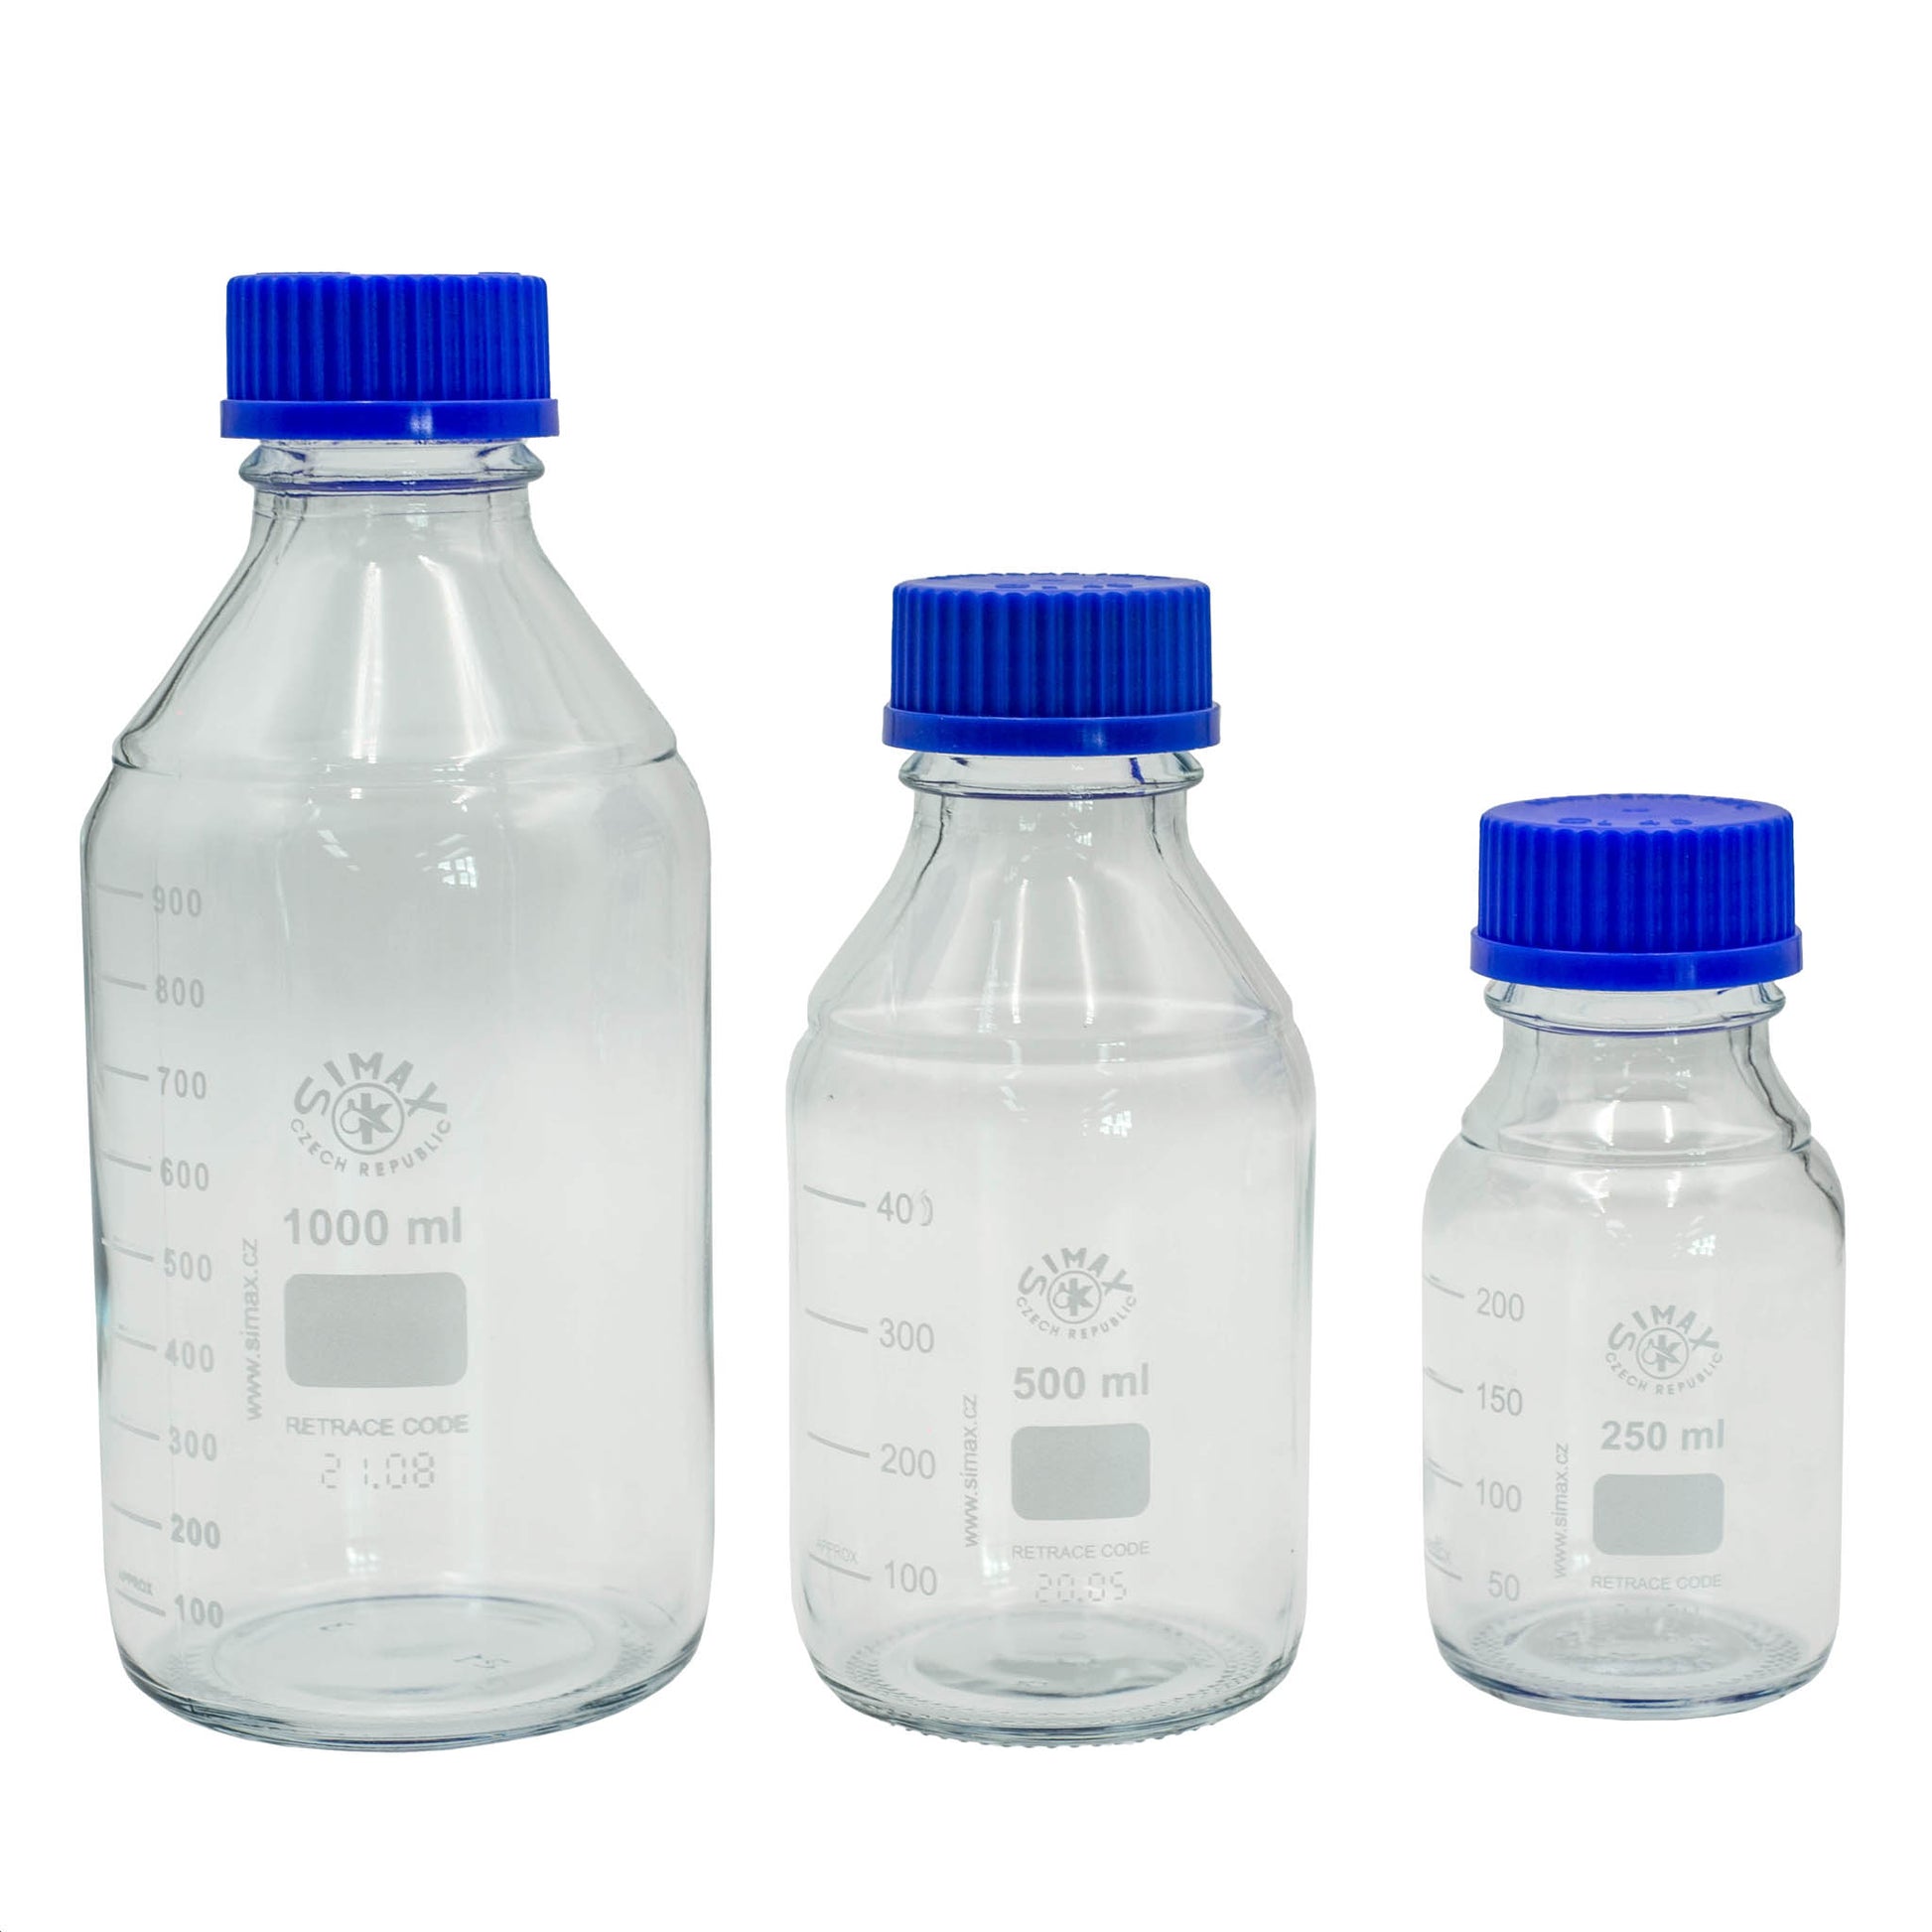 Size comparison of 1000ml, 500ml and 250ml borosilicate bottles.  